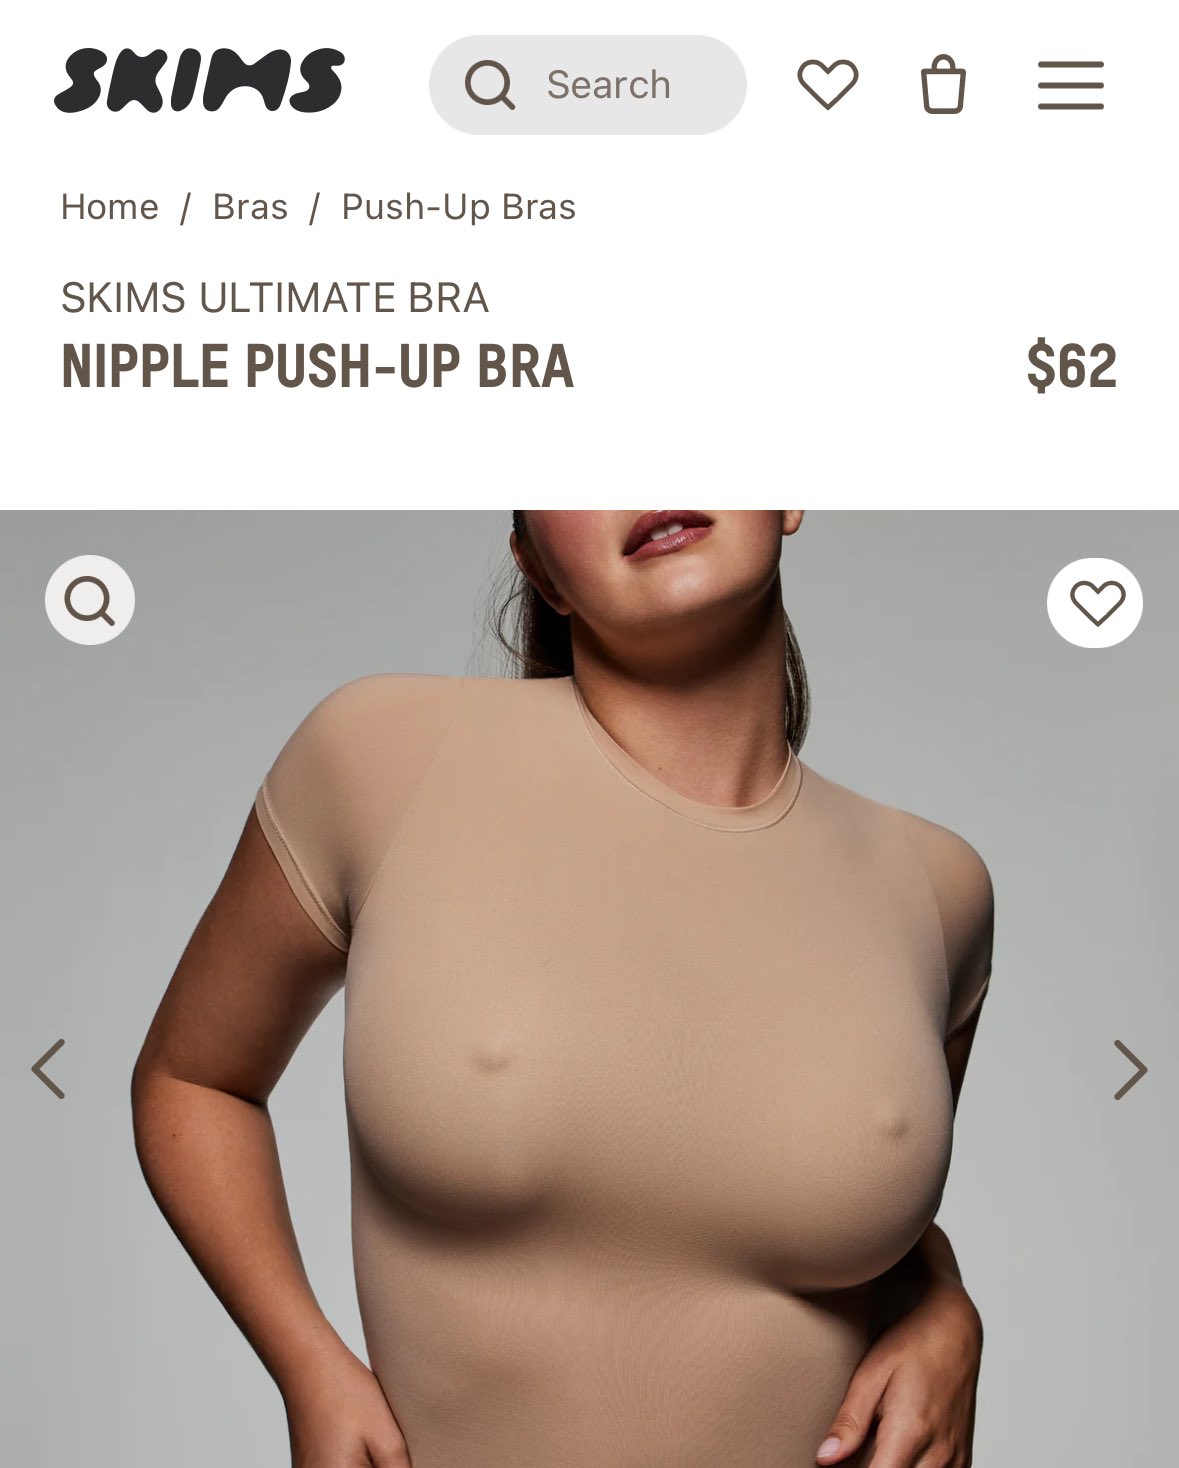 Nipple Push-Up Bra